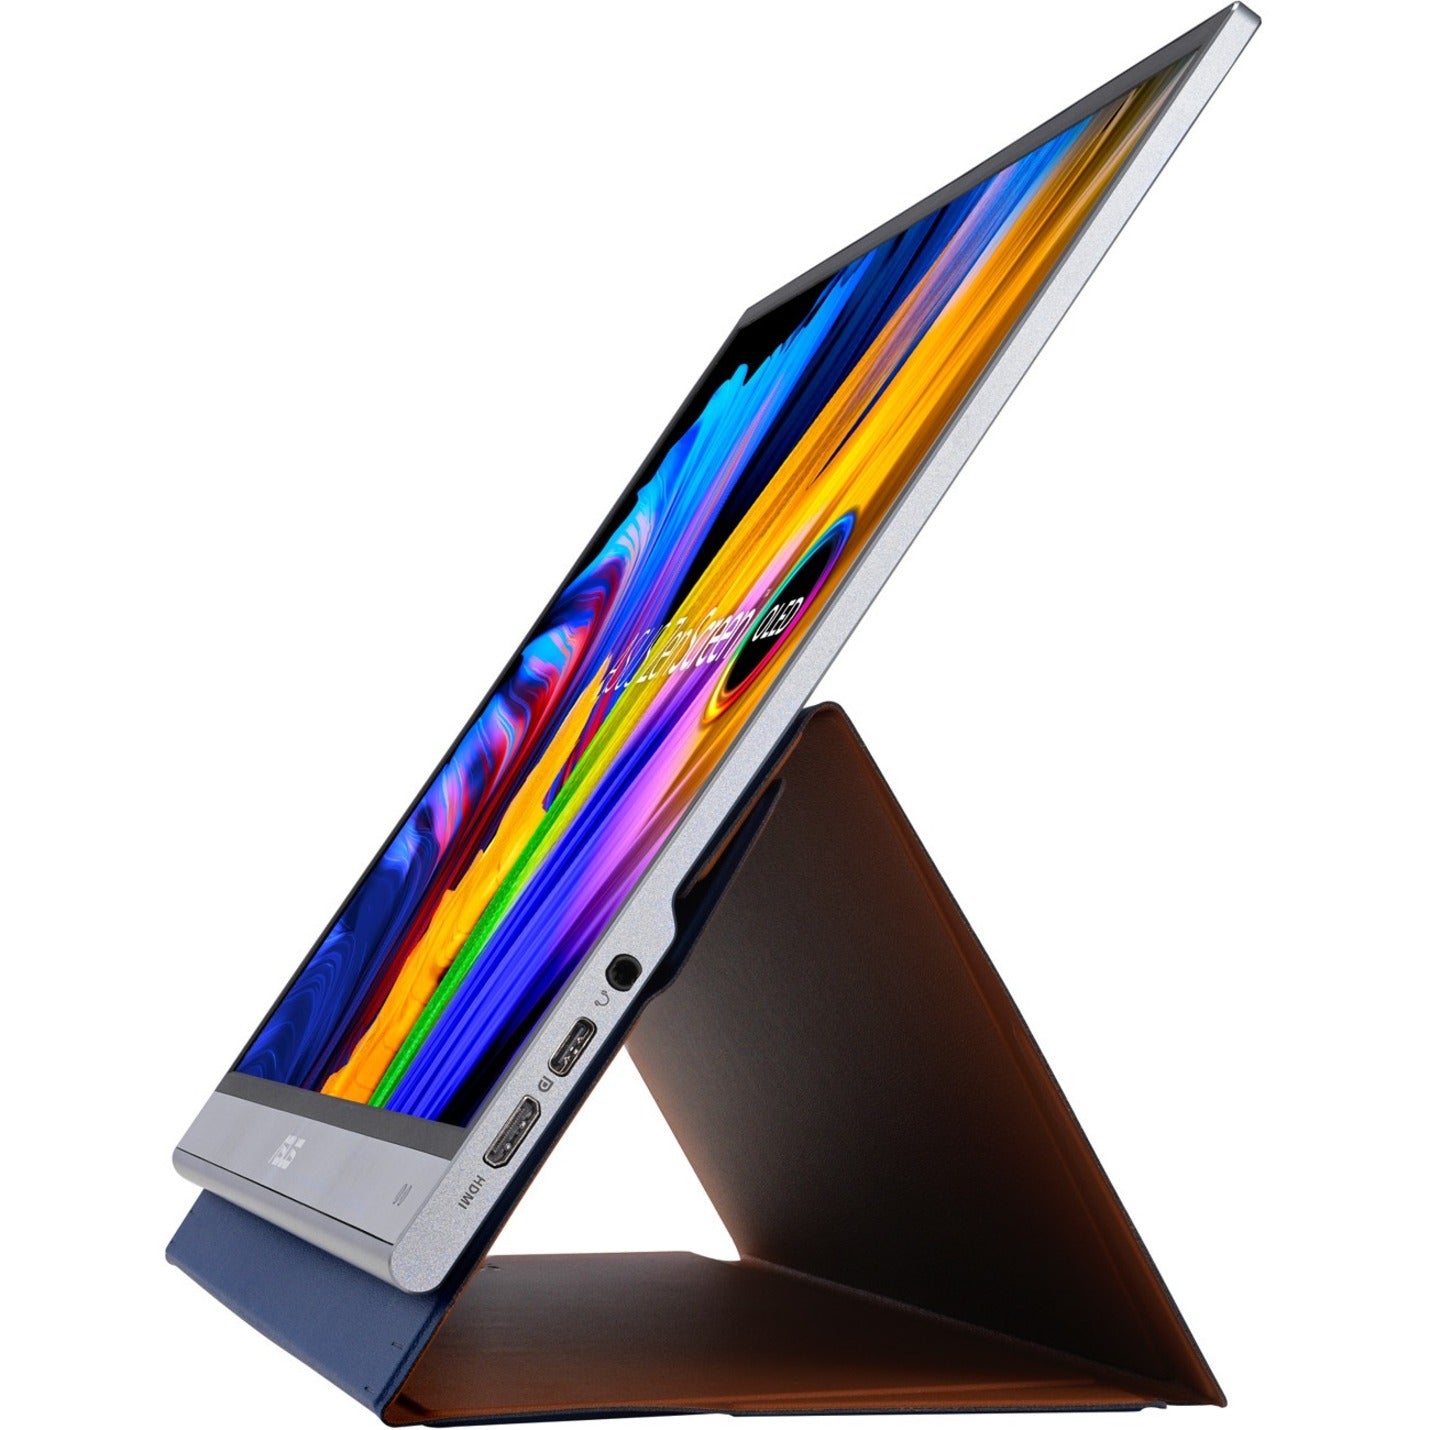 Asus MQ16AH ZenScreen 15.6" OLED Monitor, Full HD, 100% DCI-P3, 400 Nit Brightness